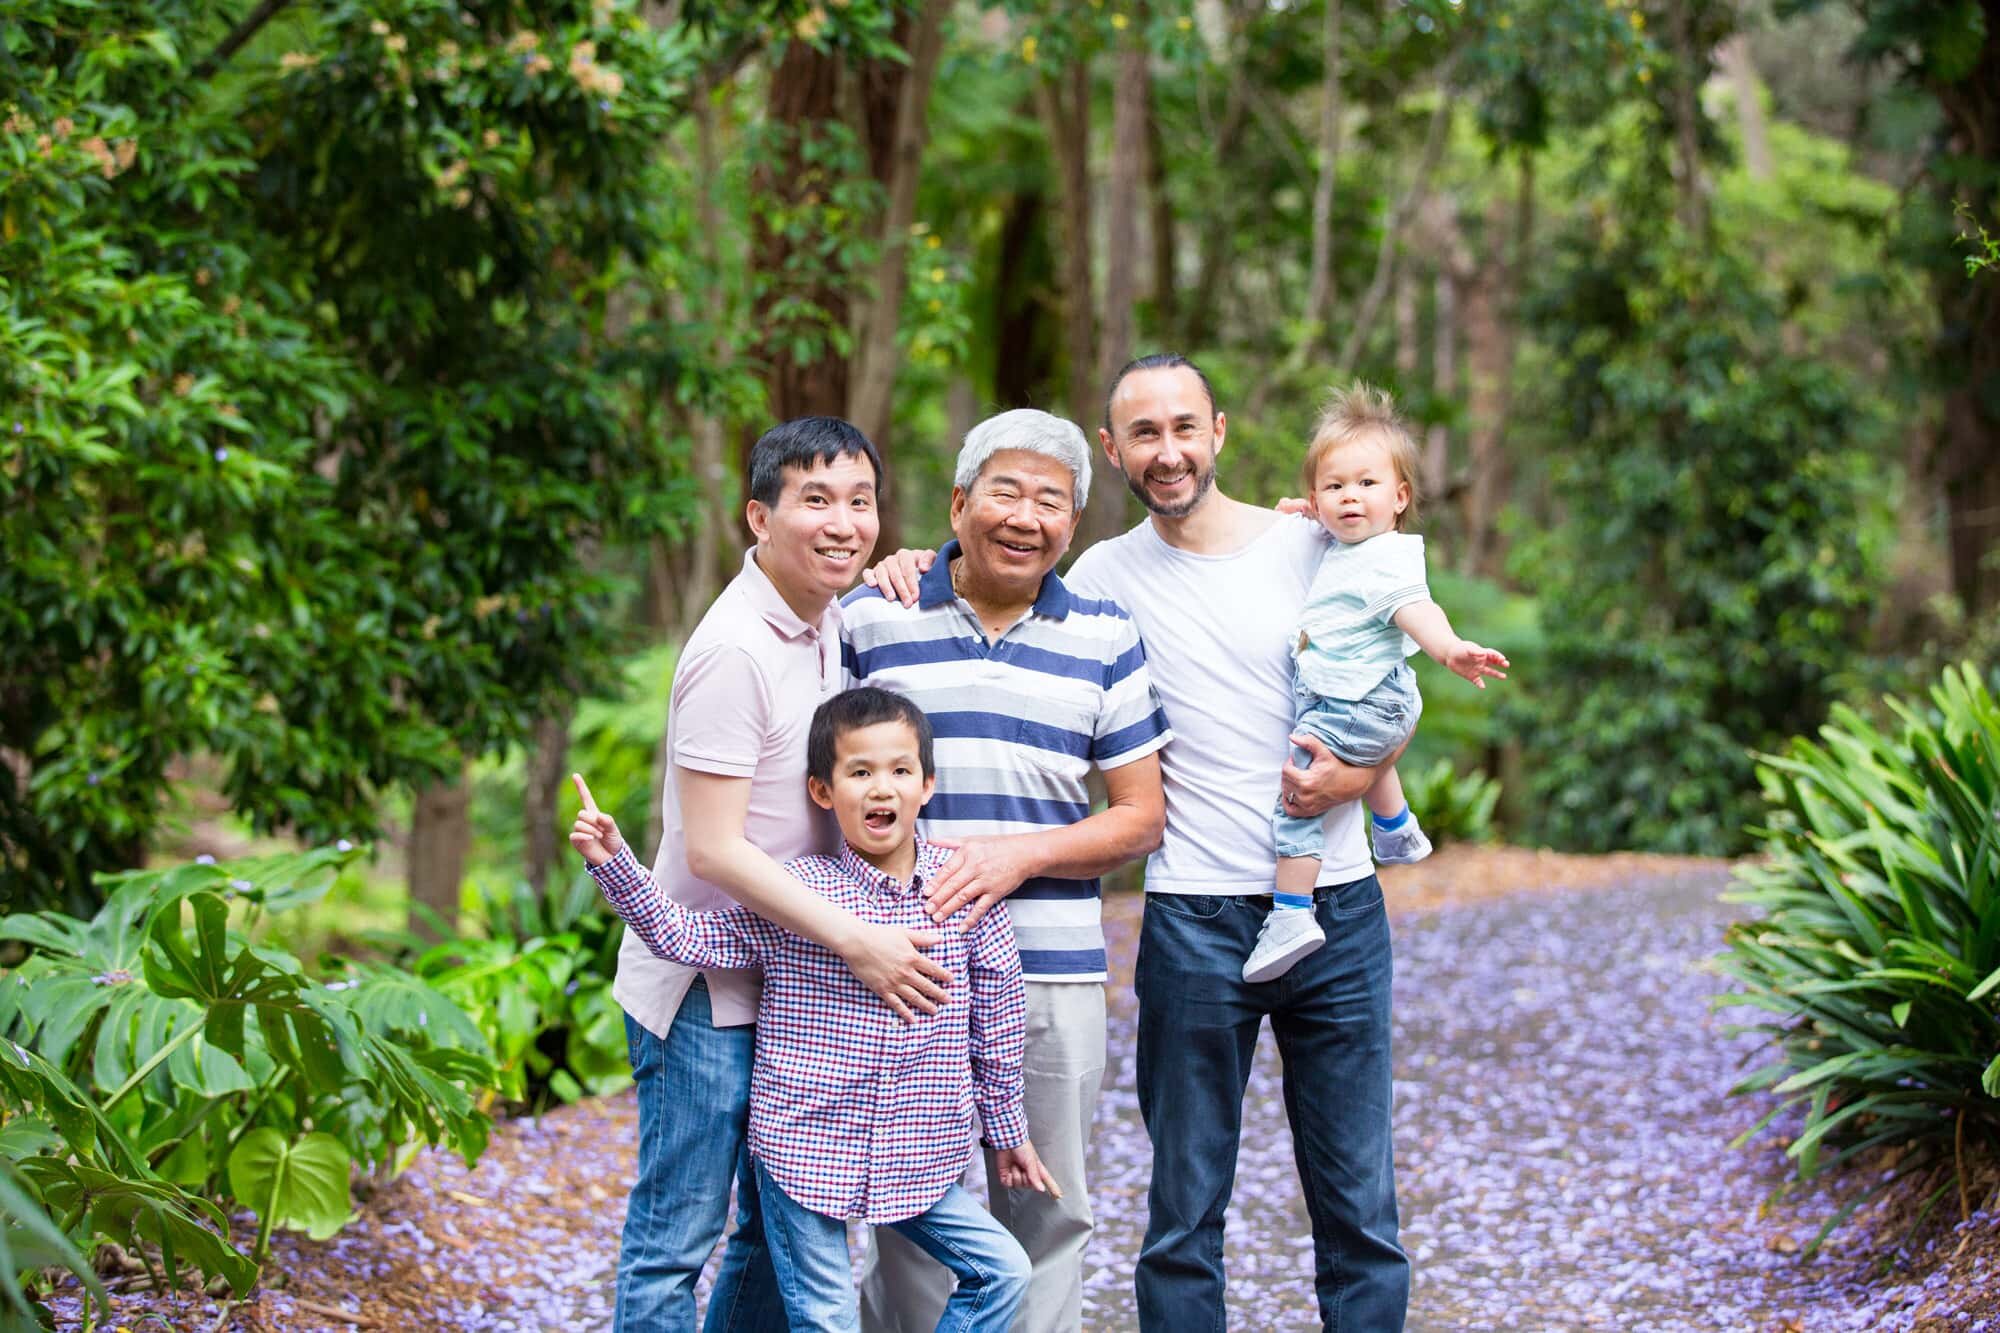 Sydney-family-photographer-outdoor-family-photoshoot-Swain-Gardens-(7).jpg